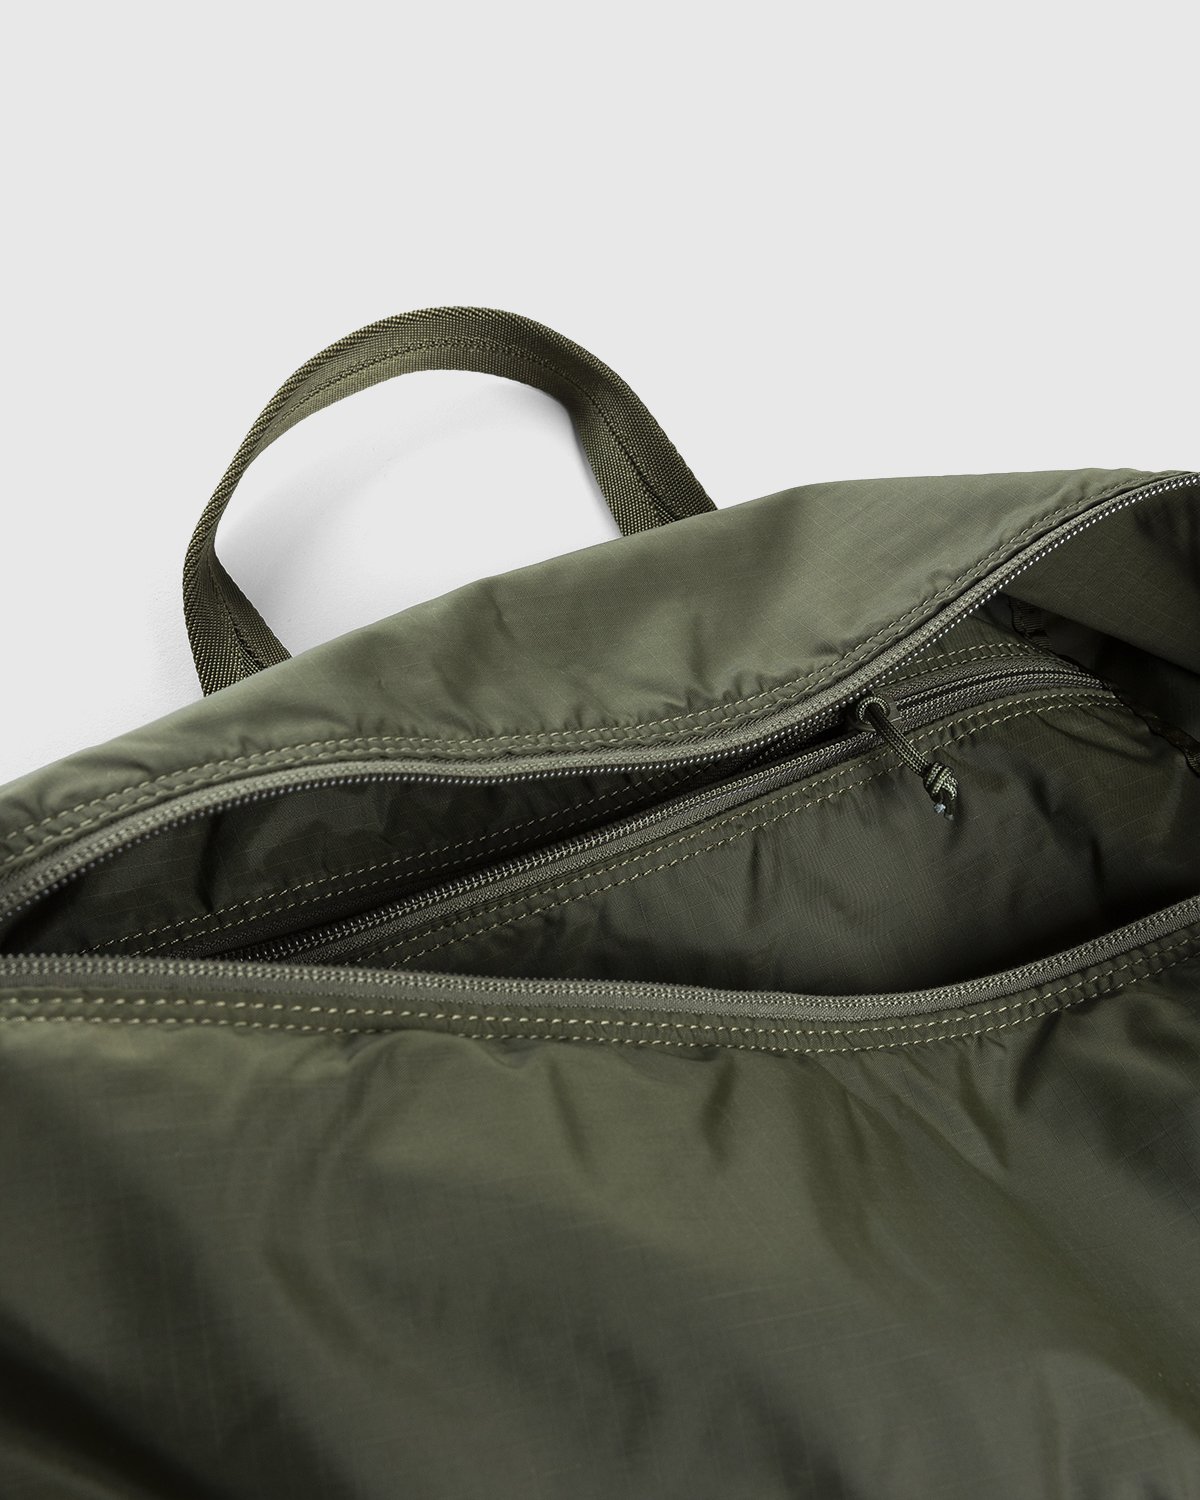 Porter-Yoshida & Co. - Flex 2-Way Duffle Bag Olive Drab - Accessories - Green - Image 8